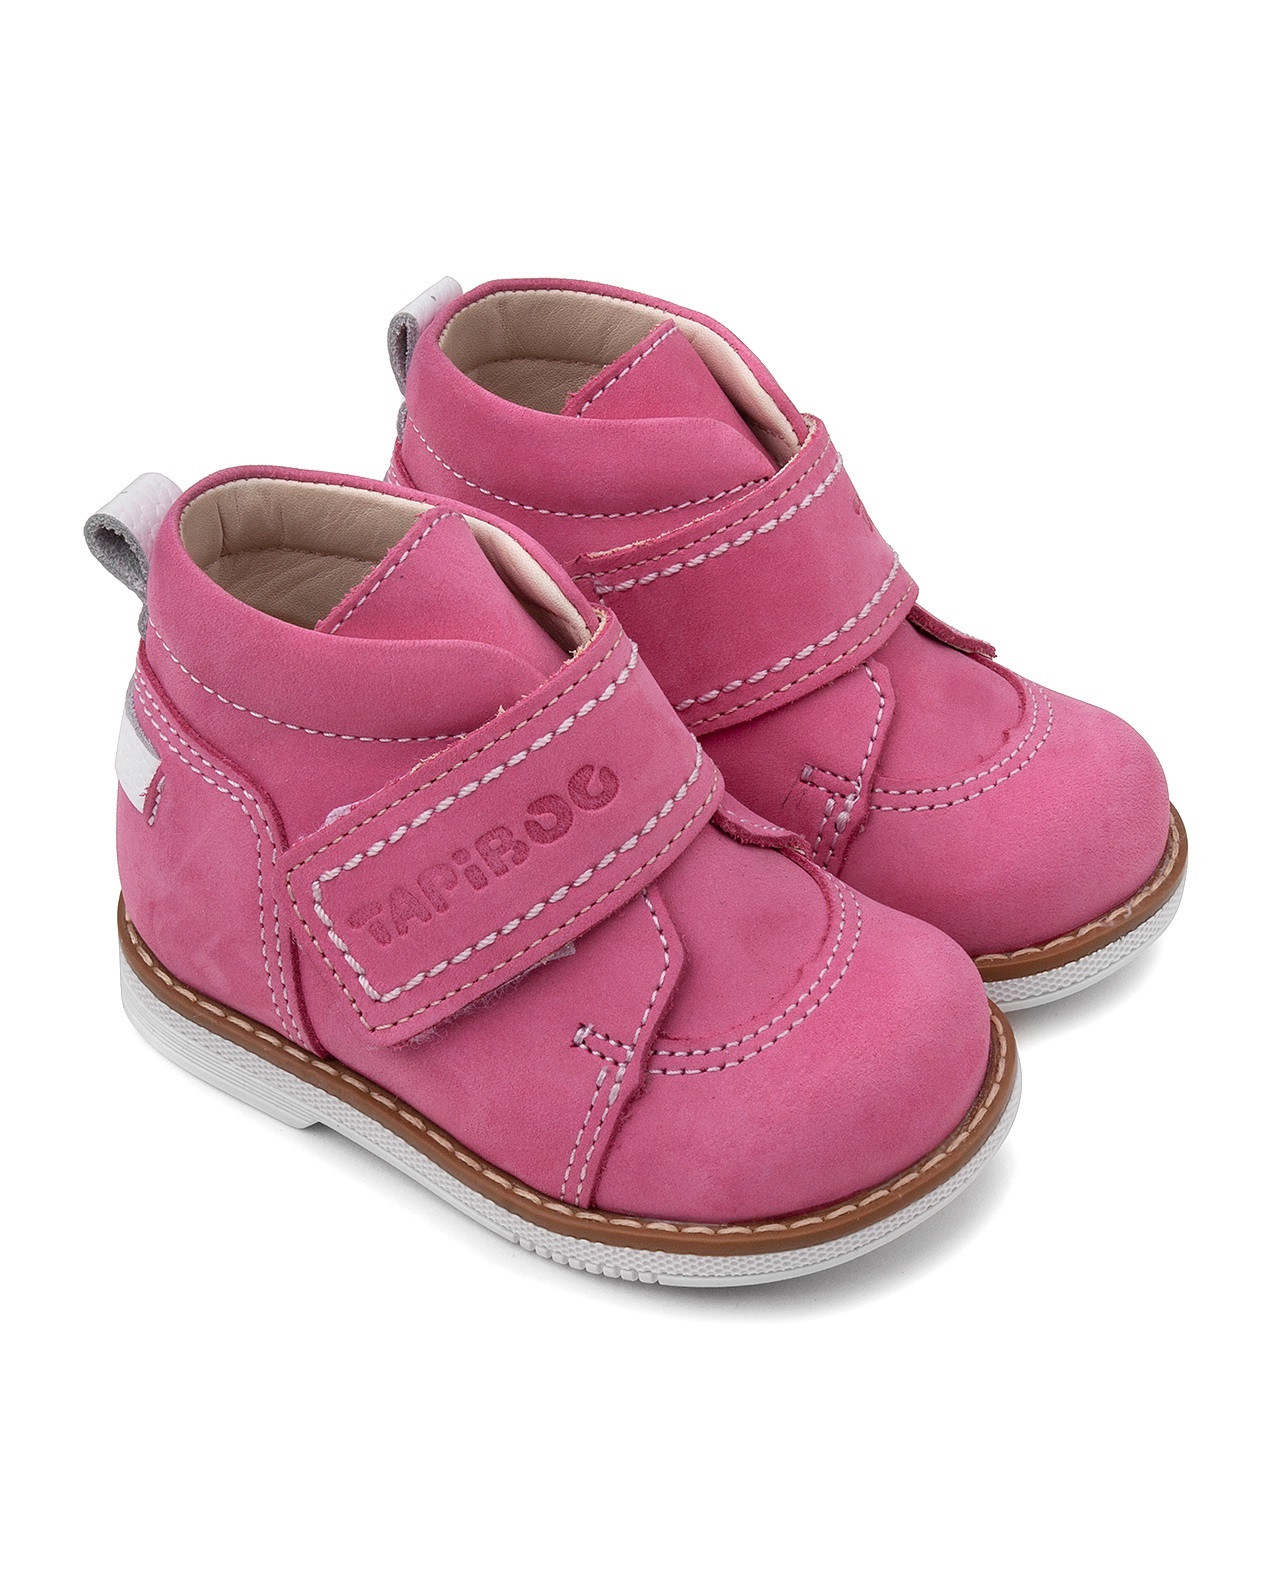 Ботинки детские Tapiboo ФУКСИЯ (78320, 25) ботинки детские 24015 фуксия малиновая радуга 2021 р18